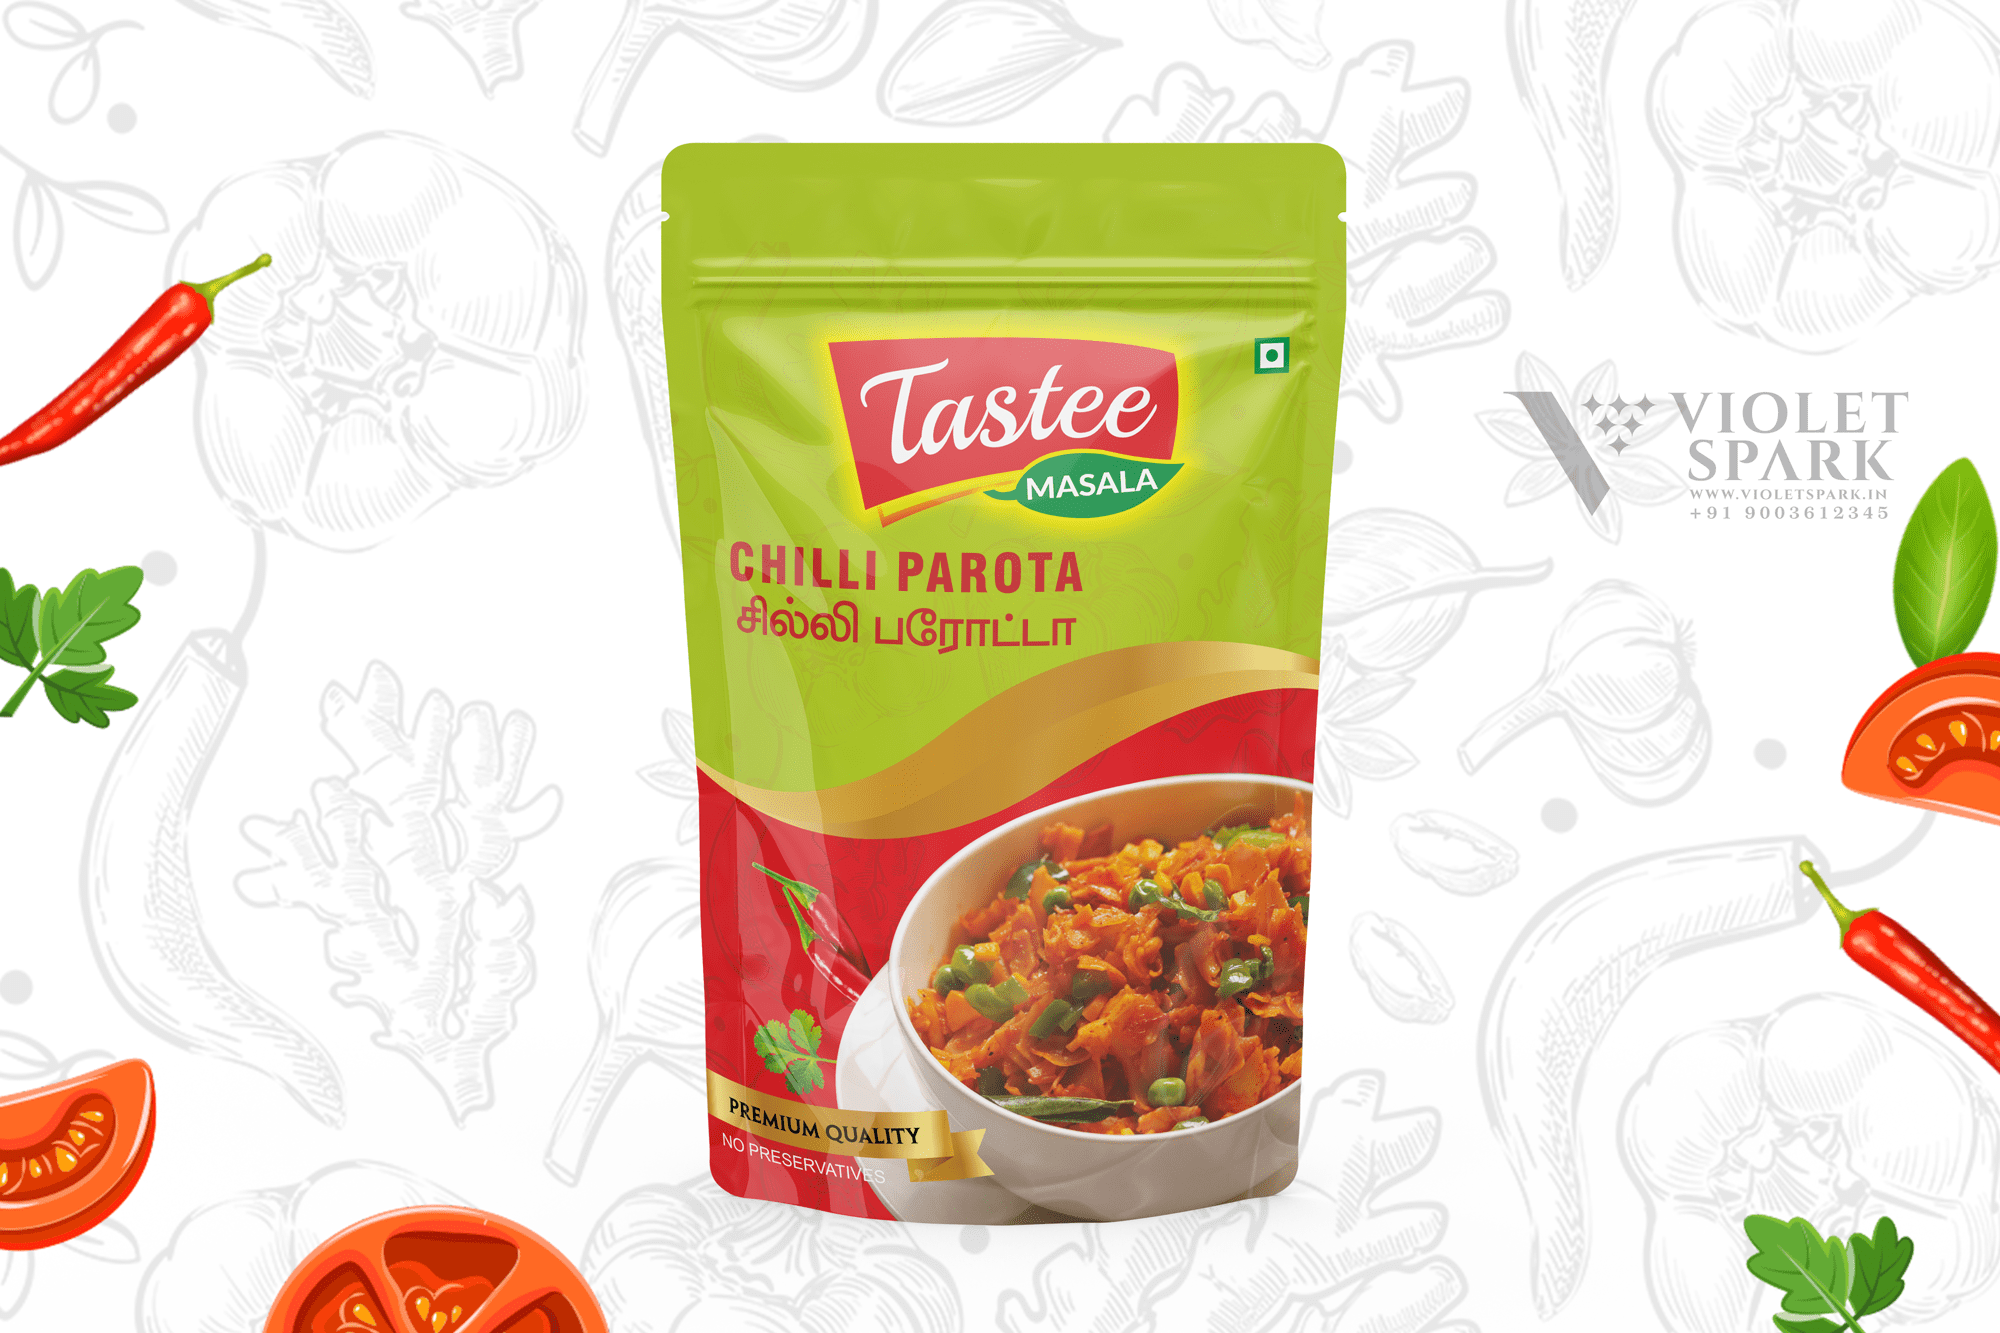 Tastee Masala Brand Chilli Parotta Pouch Packaging Design in Chennai by Creative Prints thecreativeprints